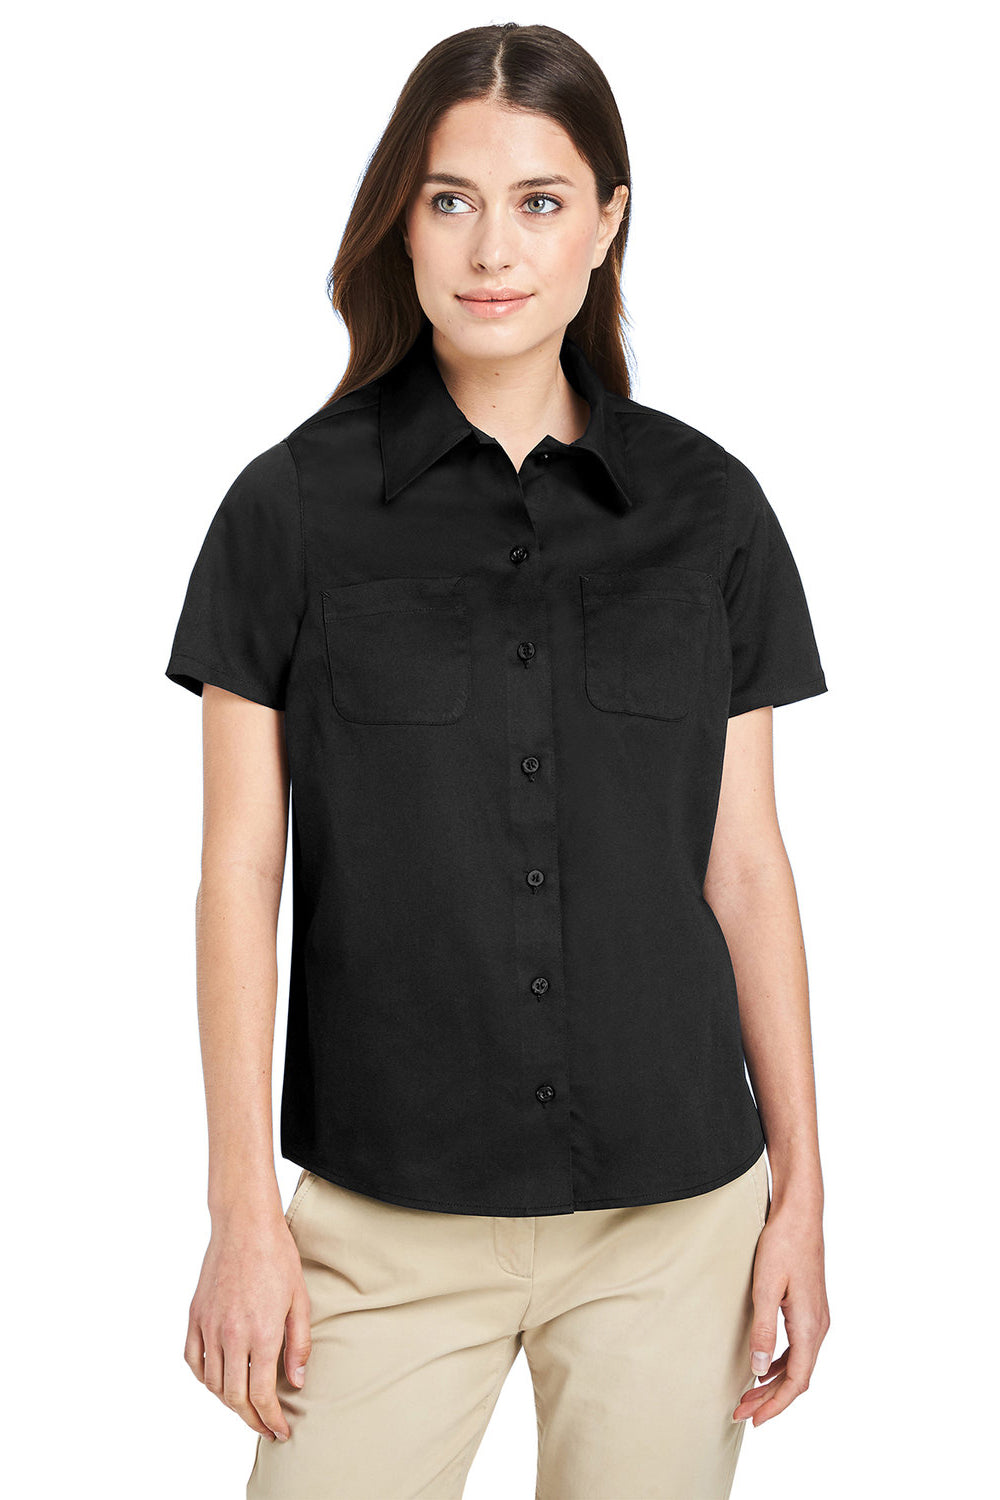 Harriton M585W Womens Advantage Short Sleeve Button Down Shirt w/ Double Pockets Black Front